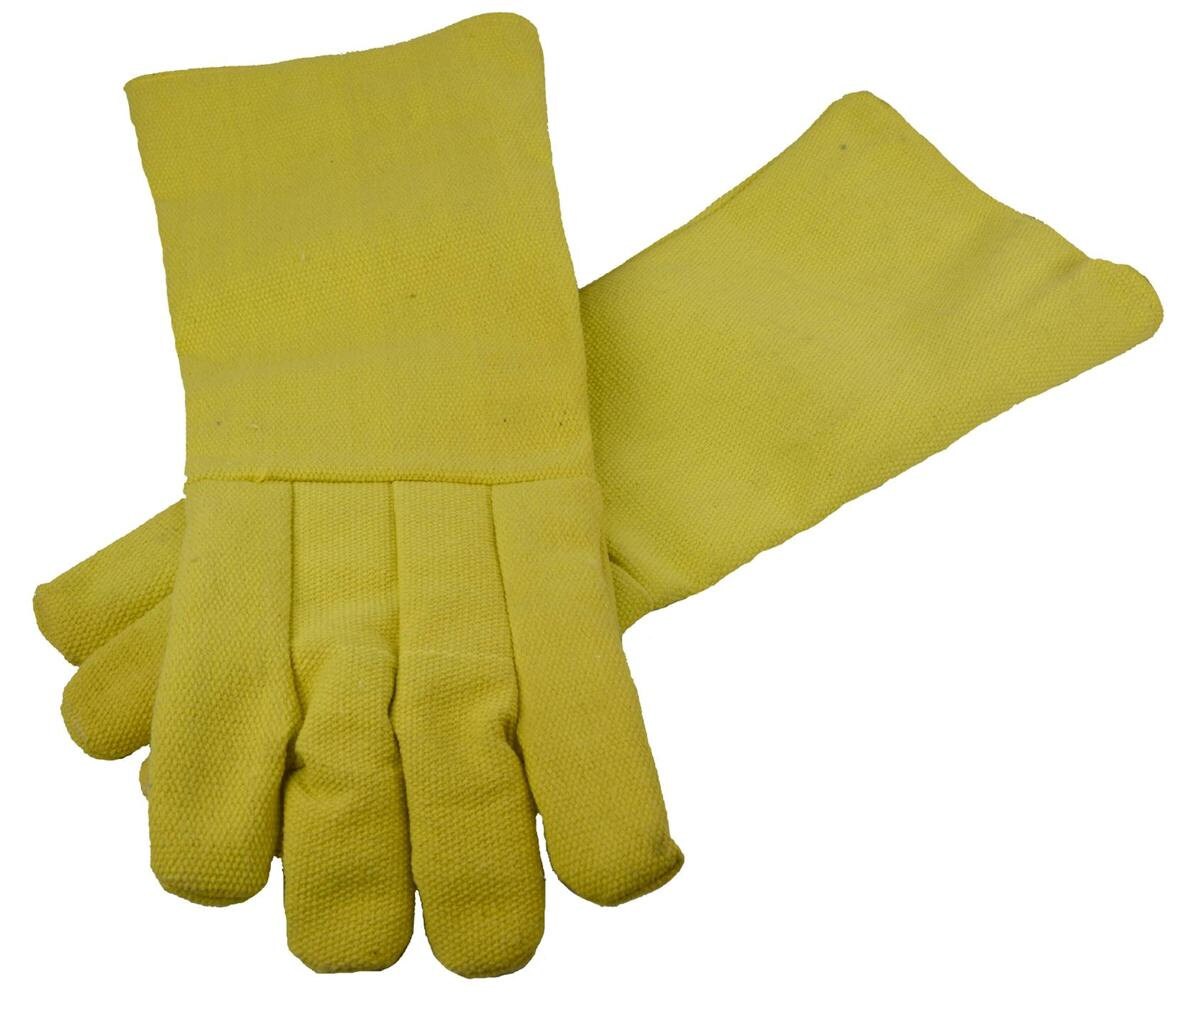 23 Kevlar Heat Resistant High Temperature Safety Gloves | Etsy